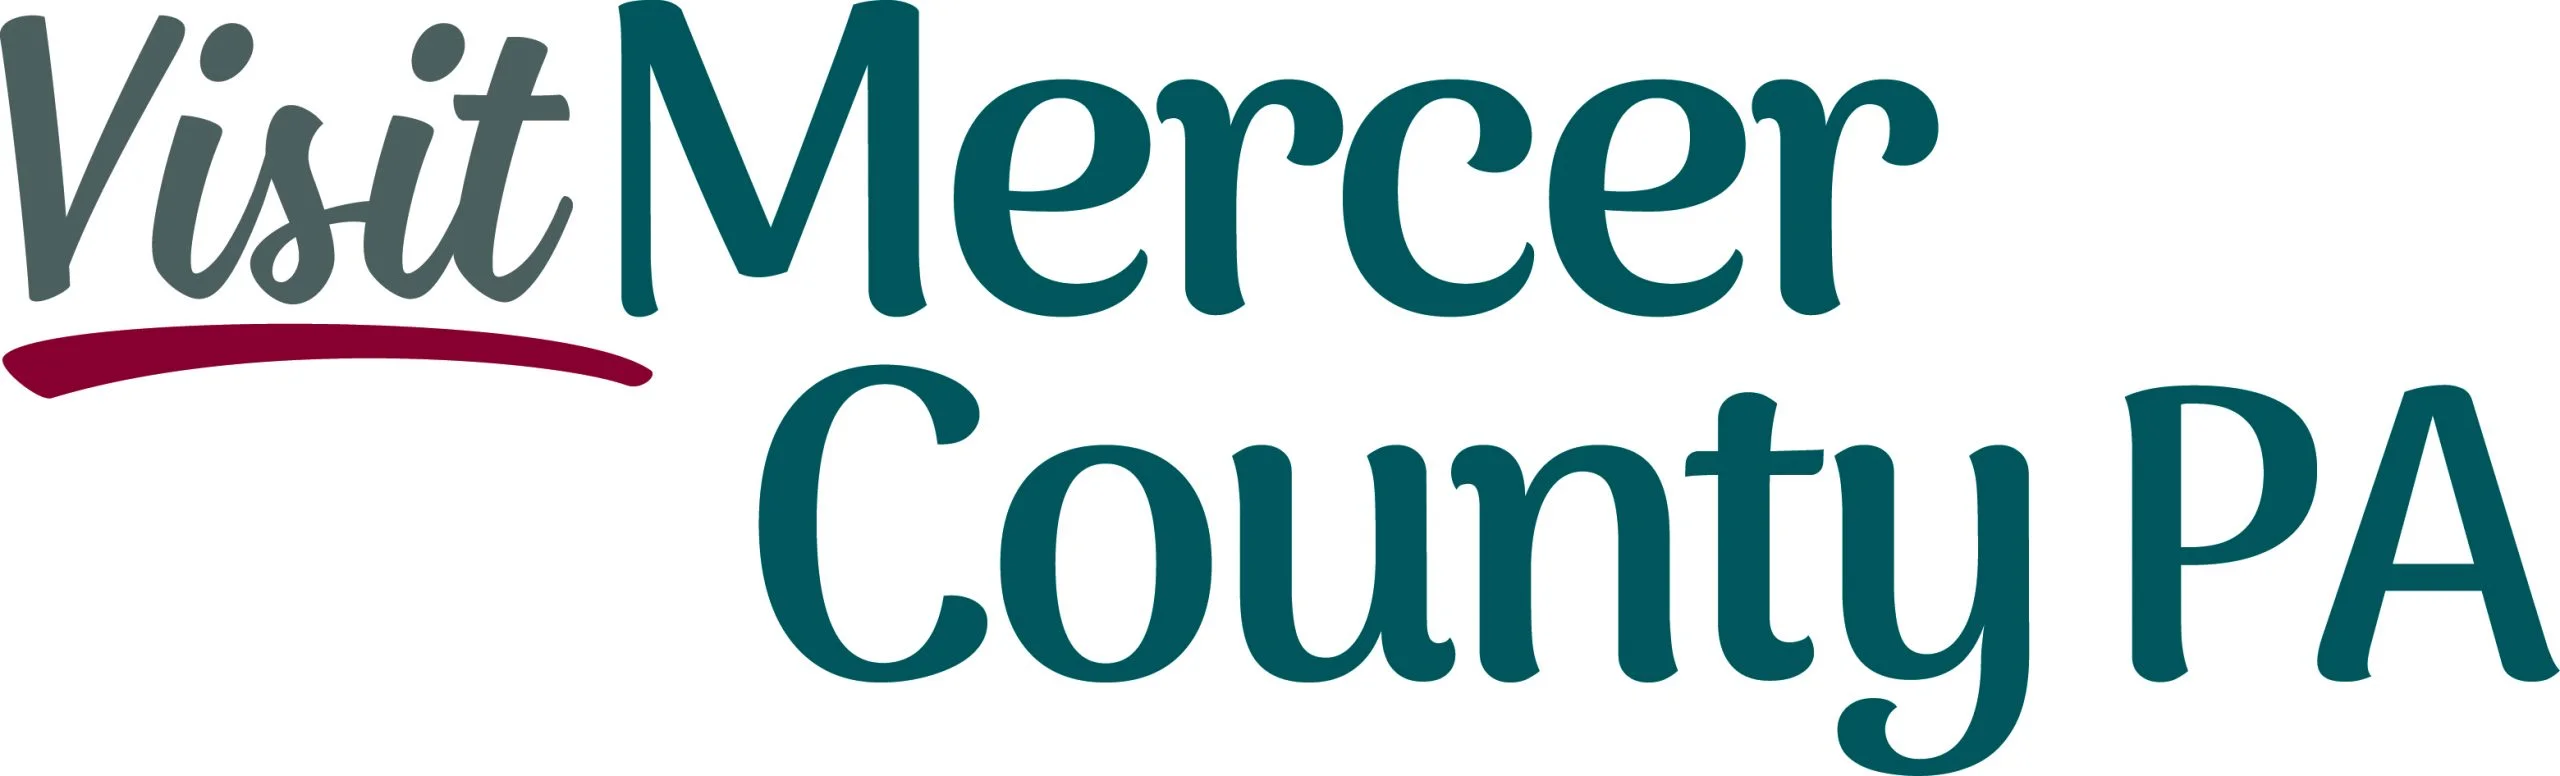 Visit Mercer Country Logo